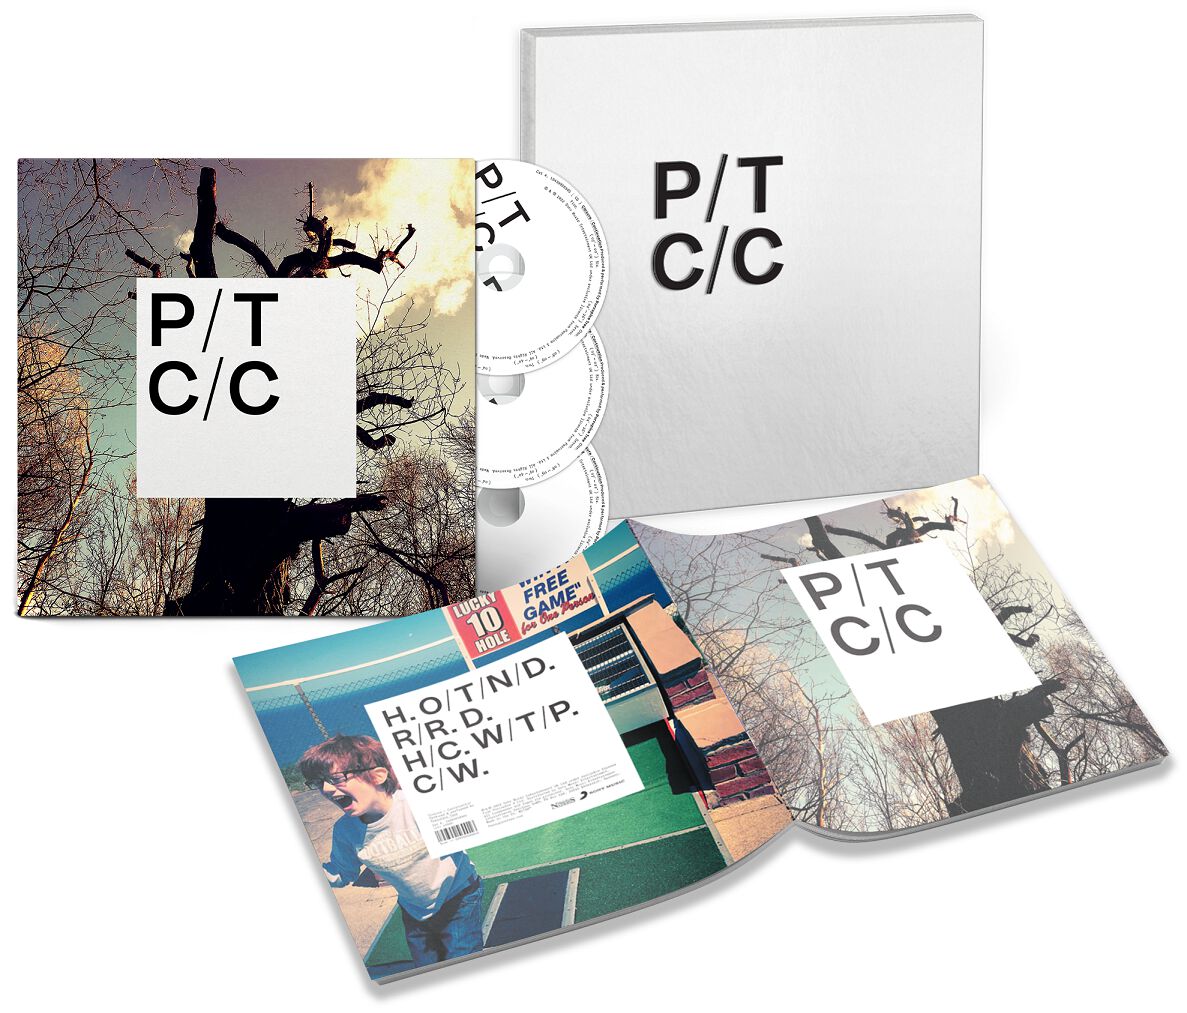 Porcupine Tree Closure / Continuation CD multicolor